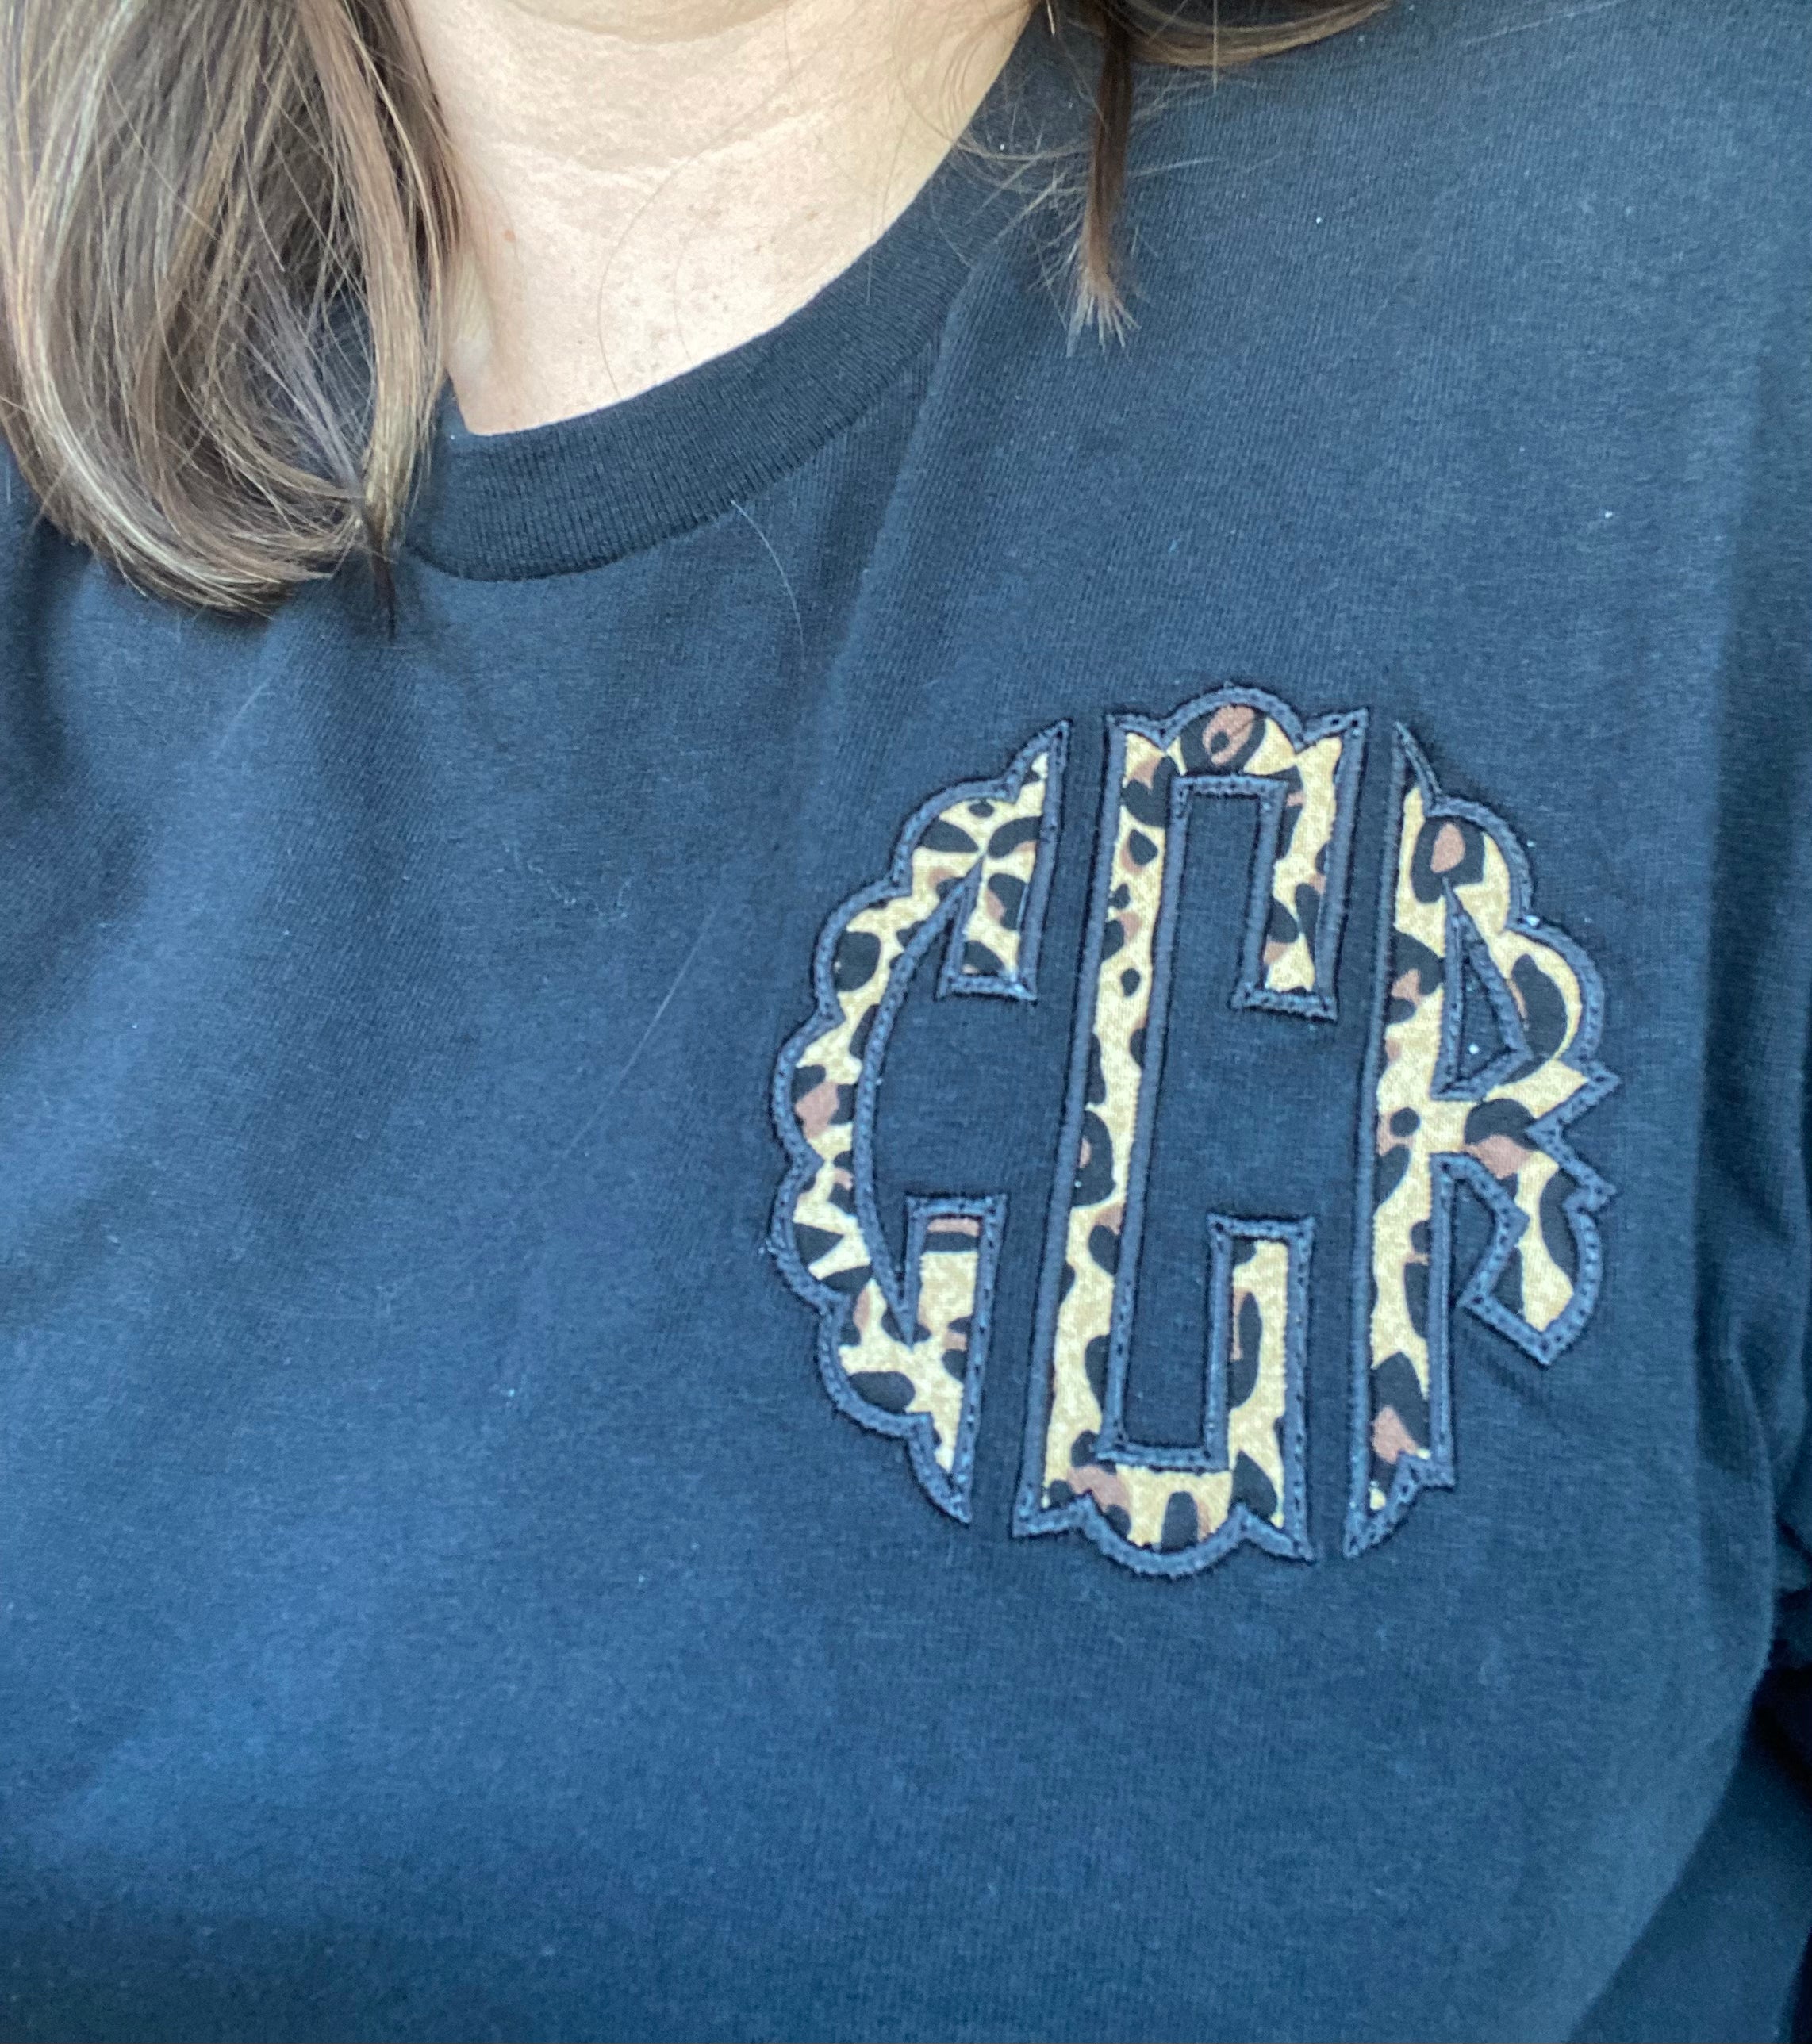 Cheetah Monogram Shirt